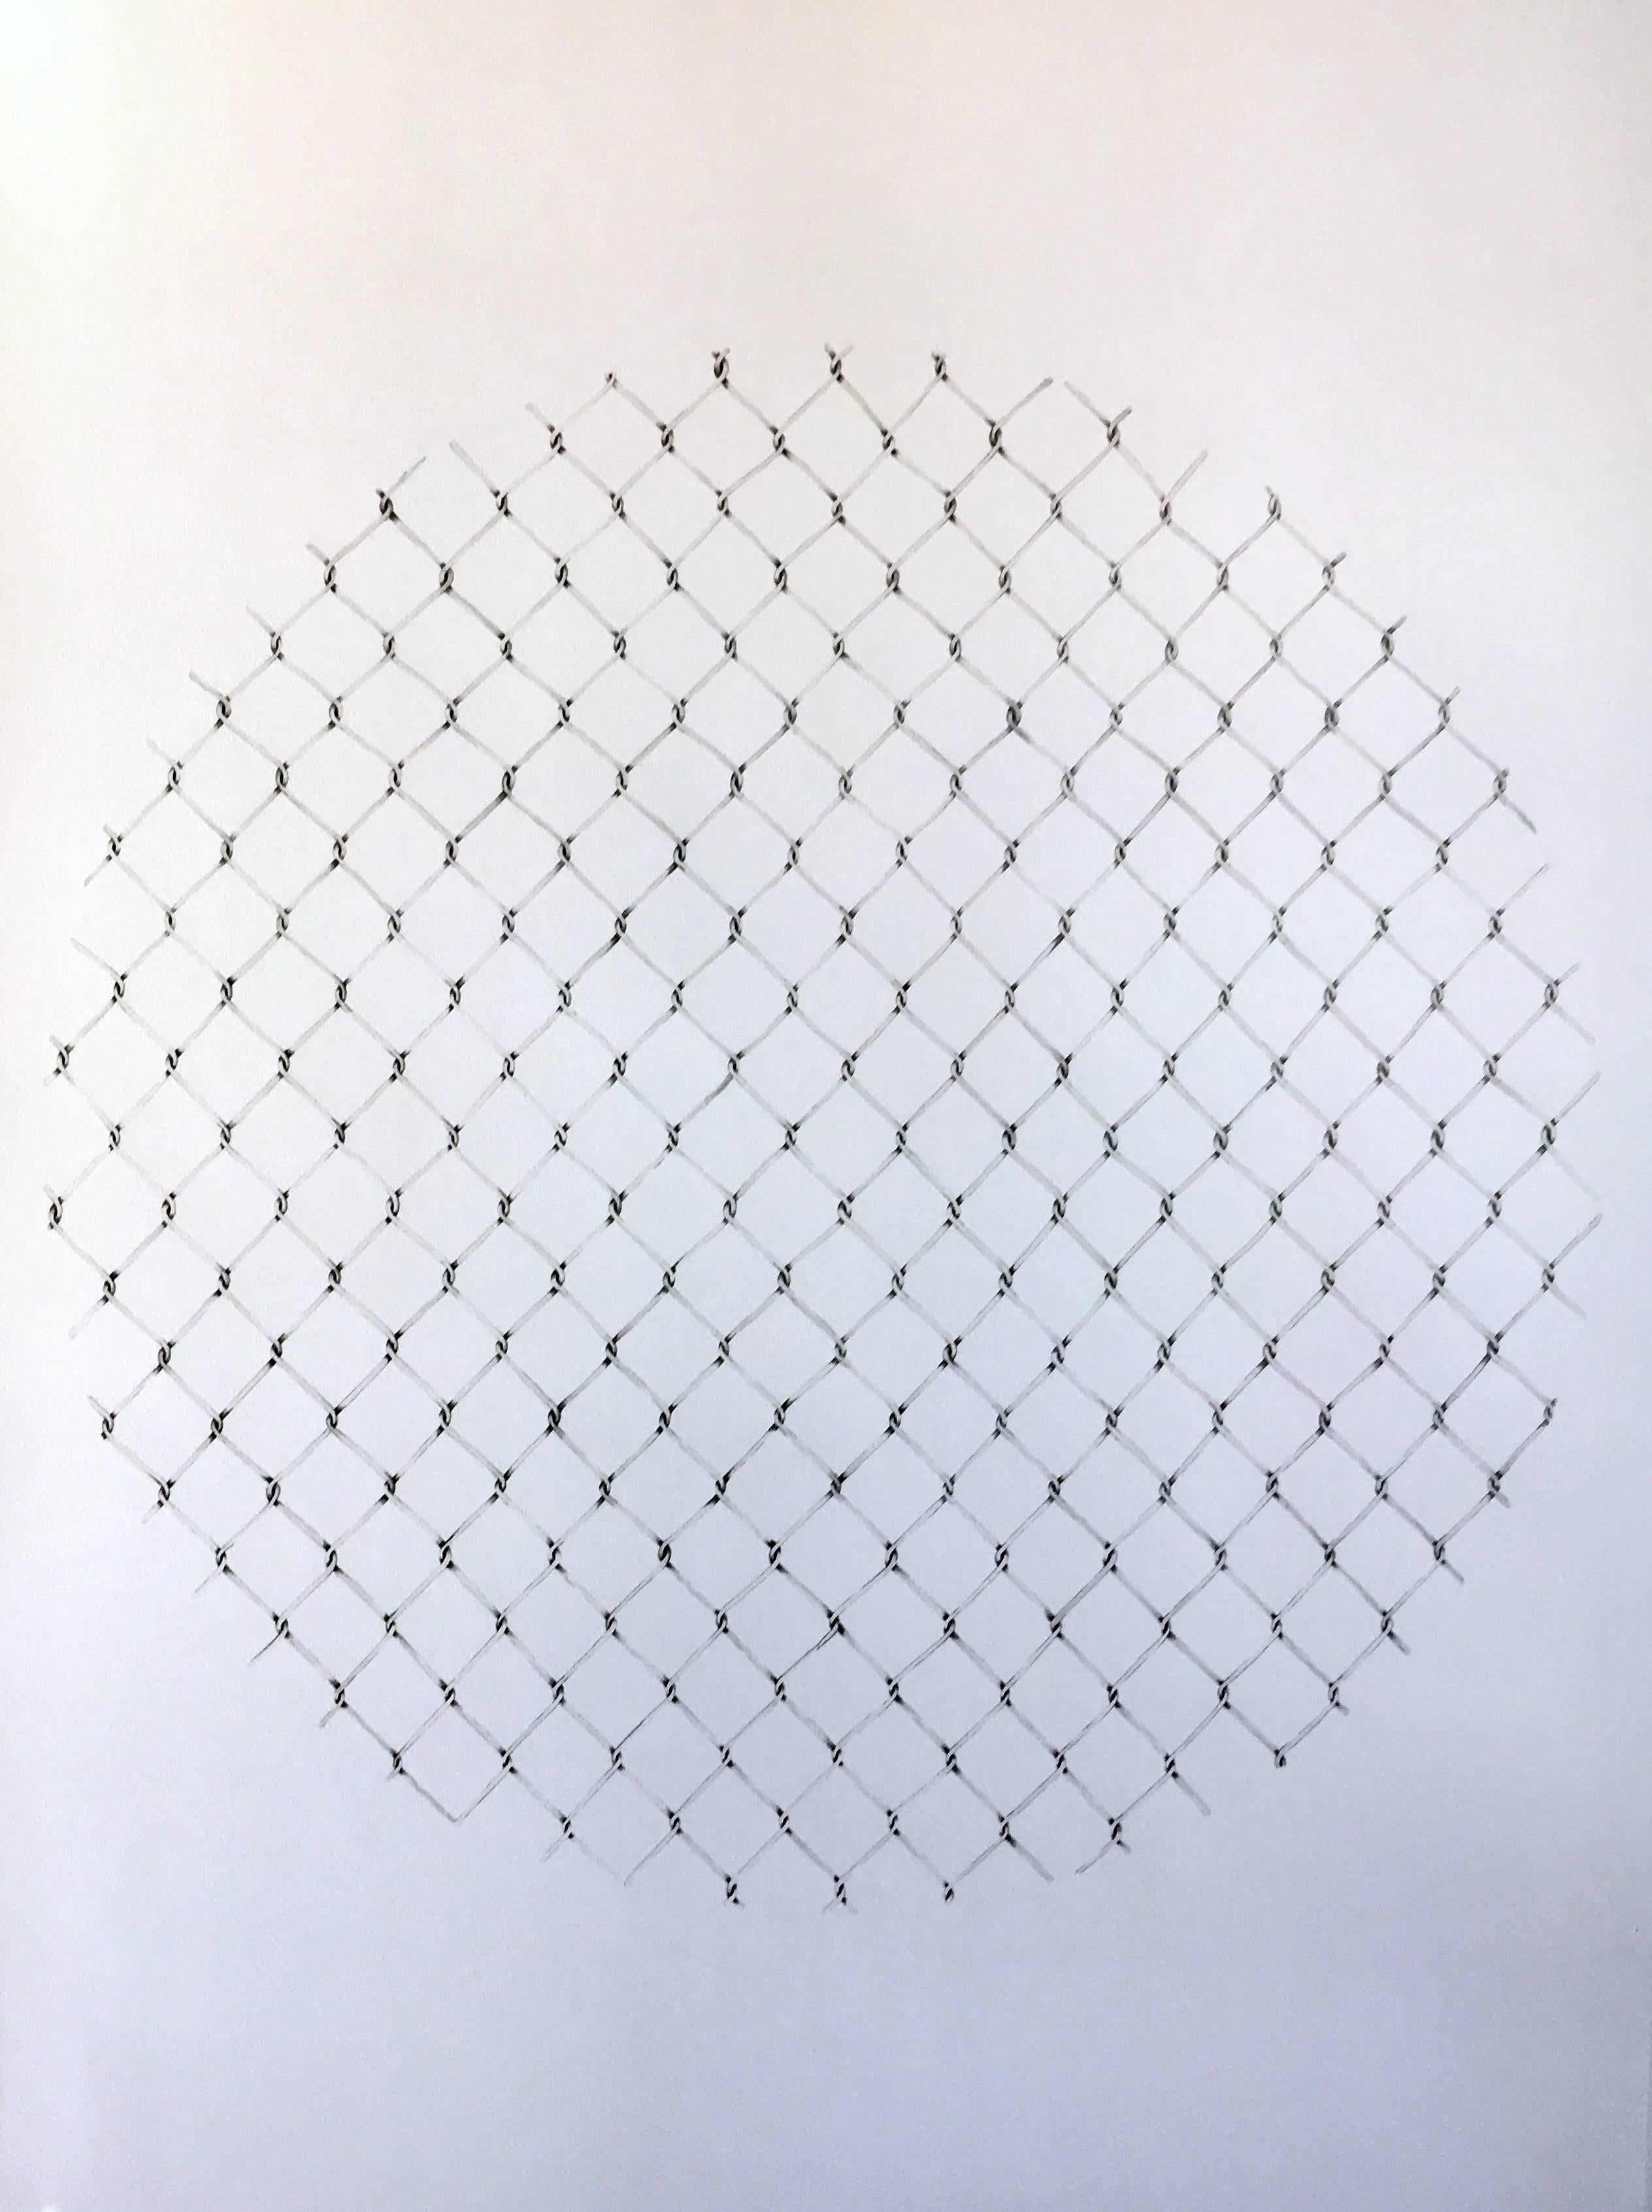 Kiki Gaffney Abstract Drawing - Chain Link Fence Mandala